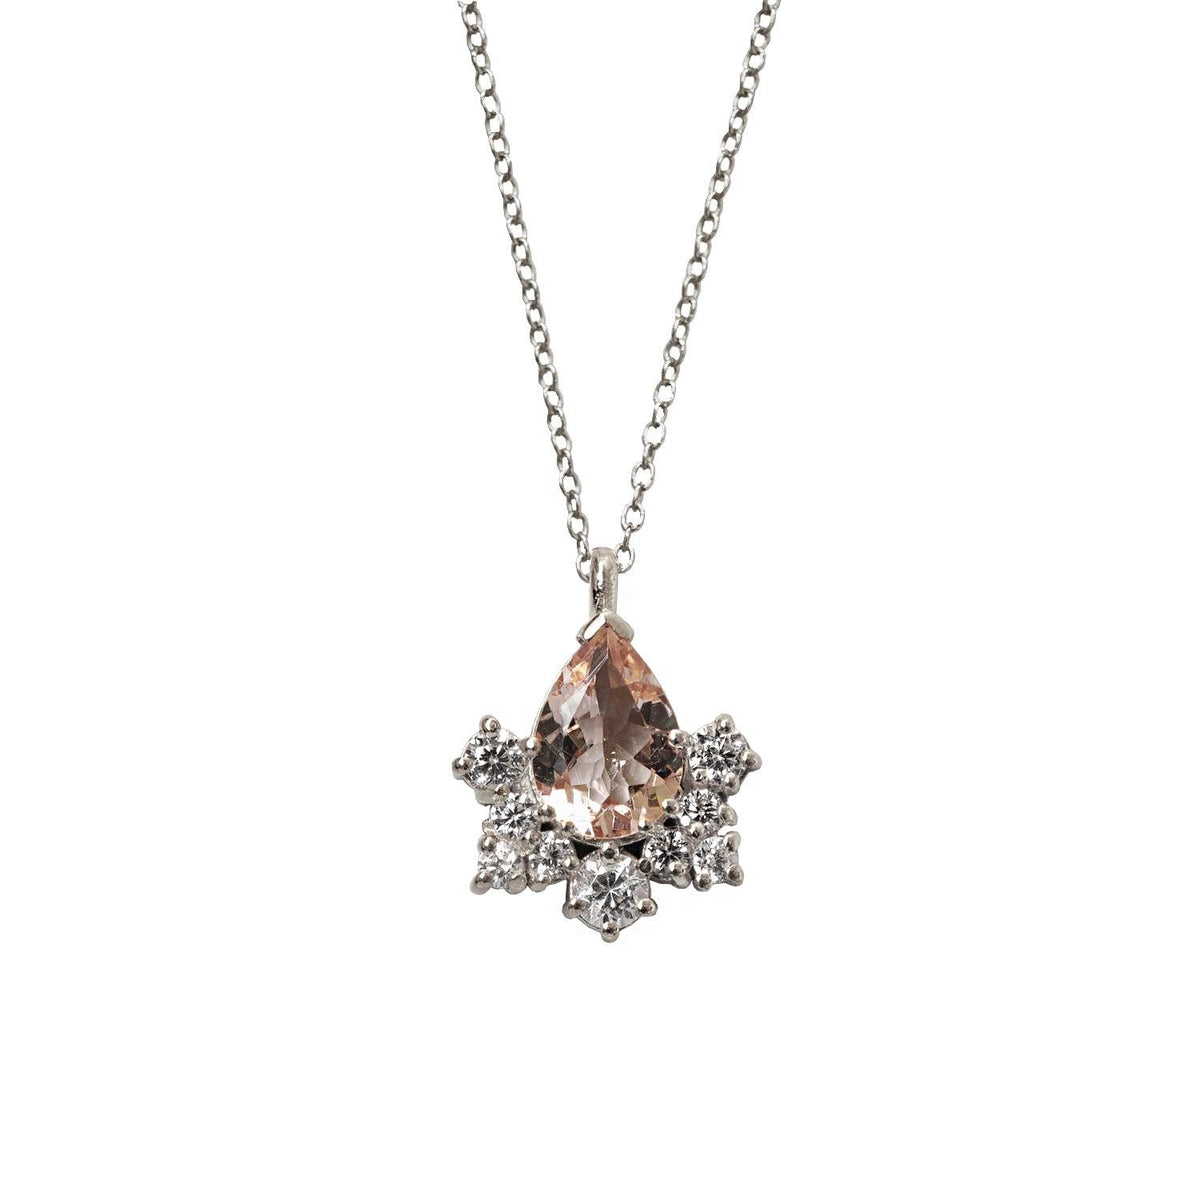 Sleeping Beauty Morganite Necklace - Tippy Taste Jewelry